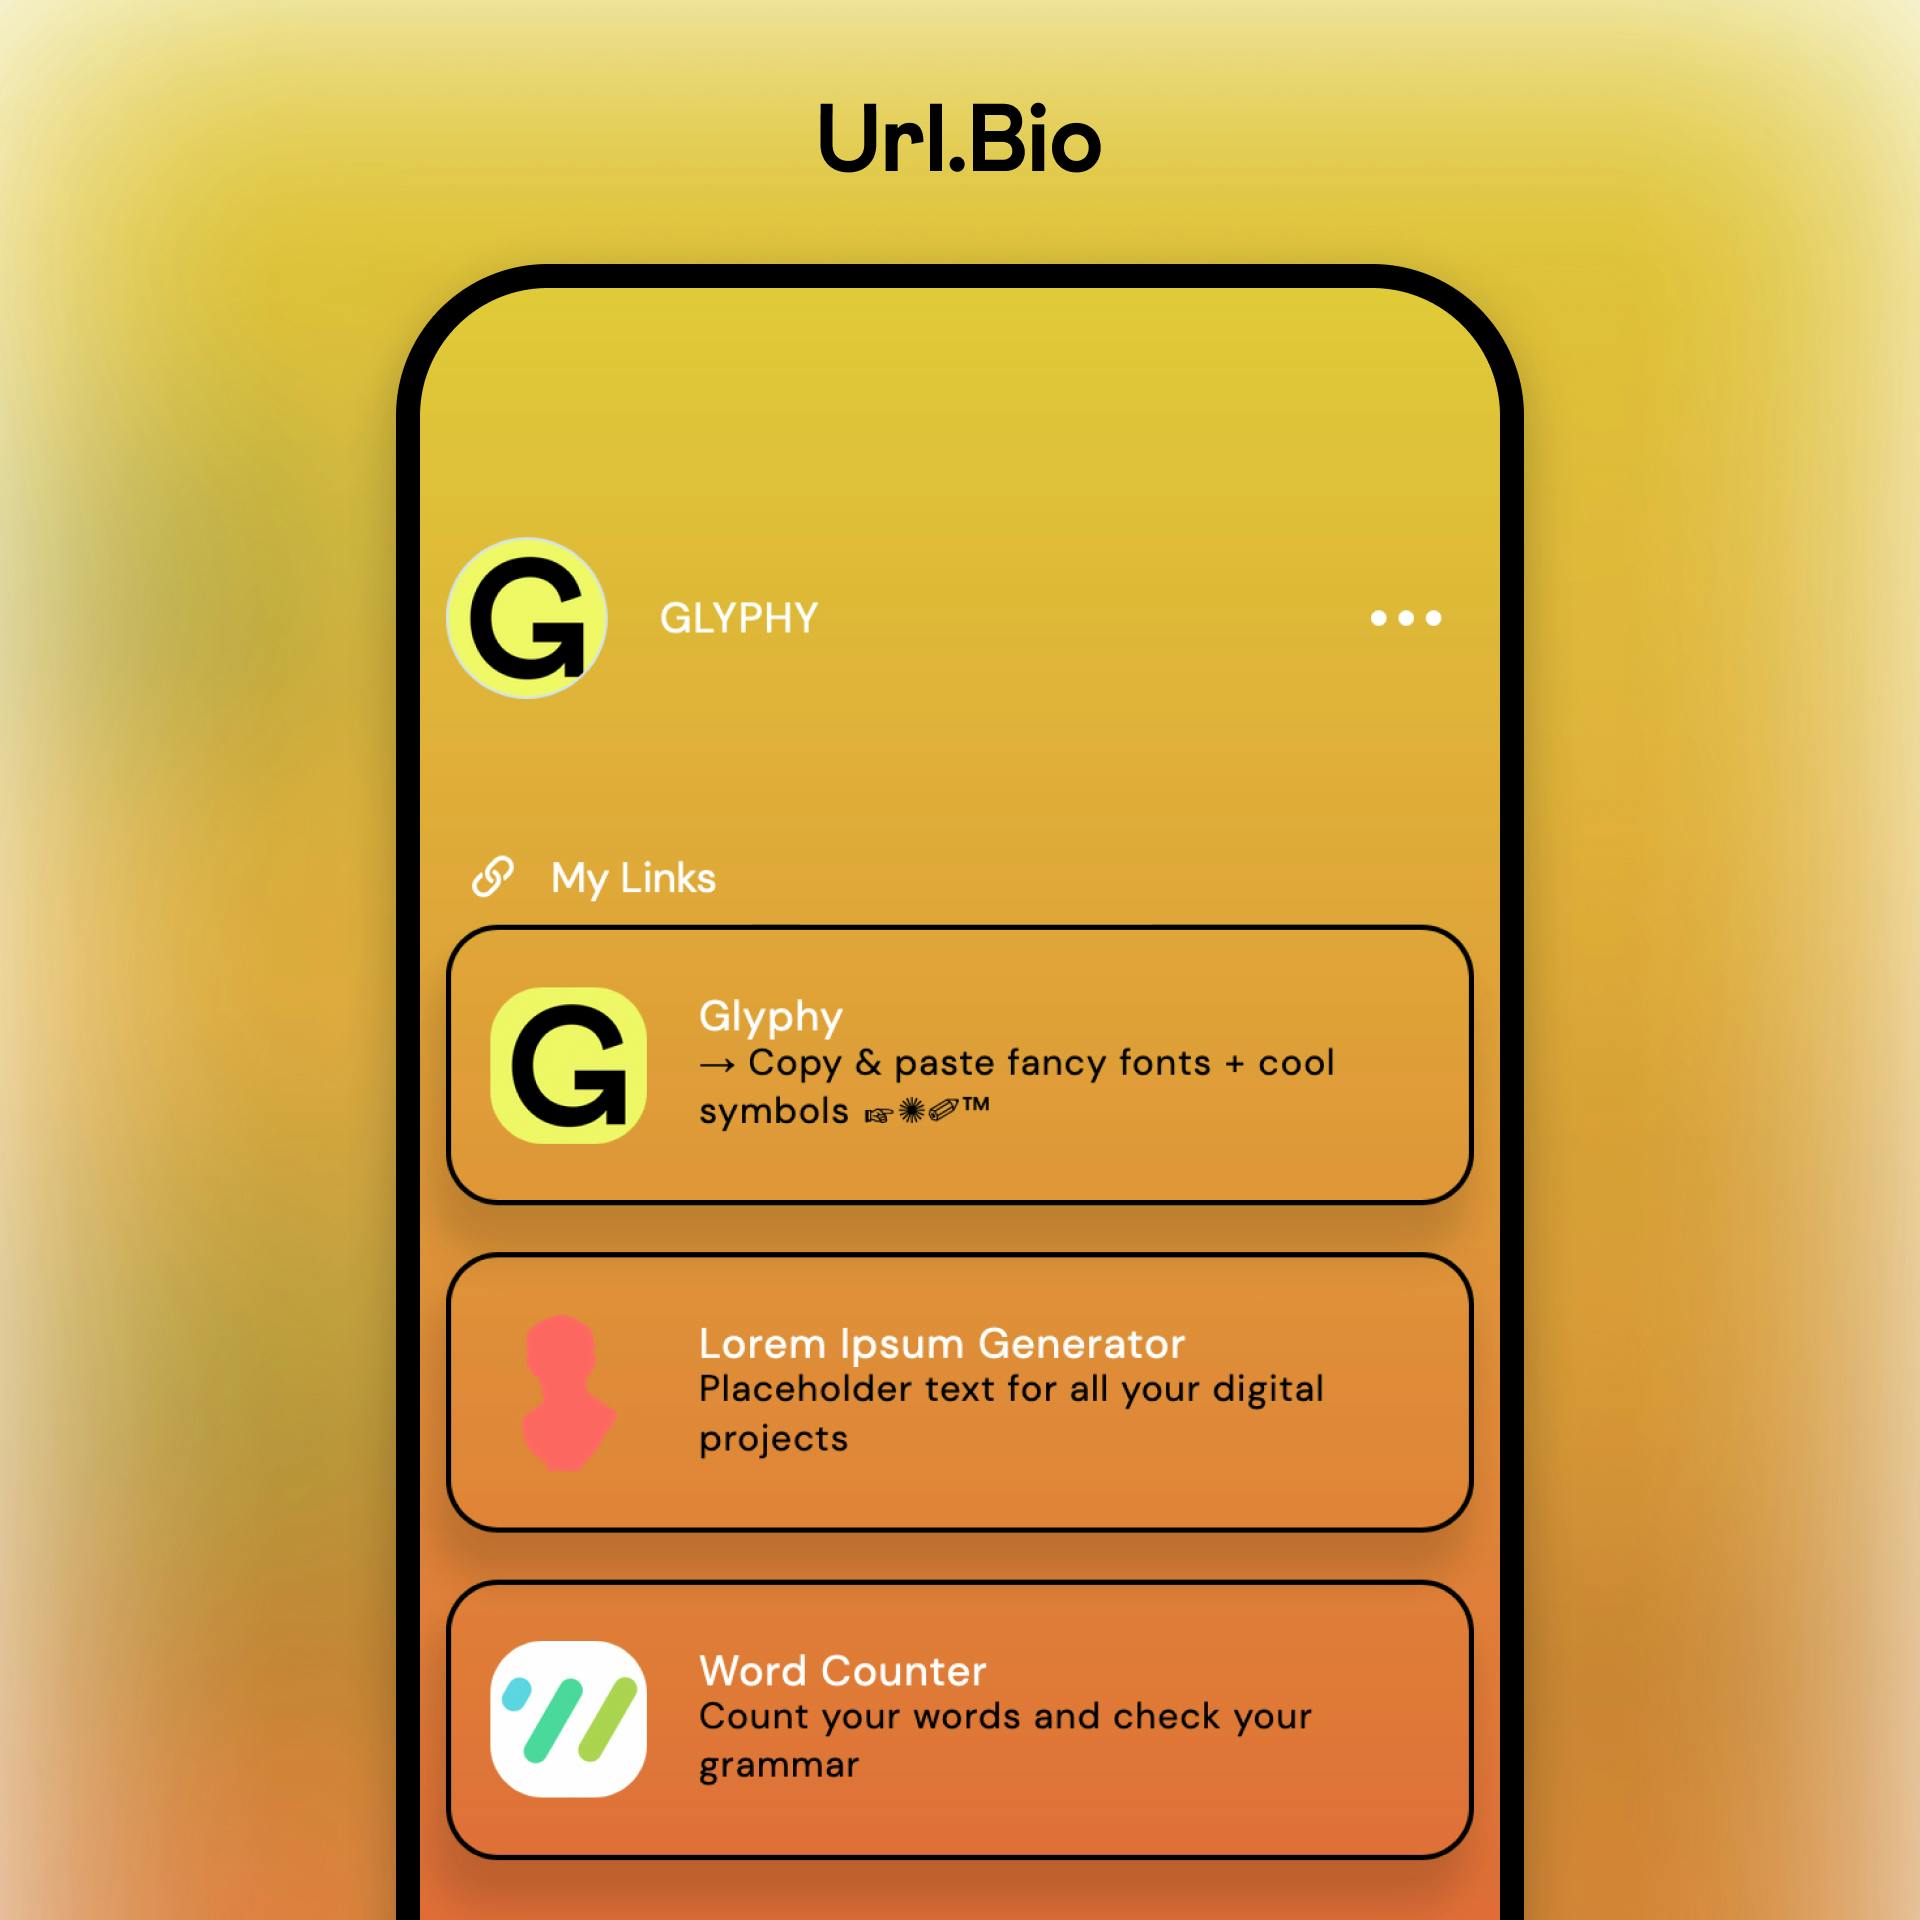 Url.Bio example profile on a mobile device